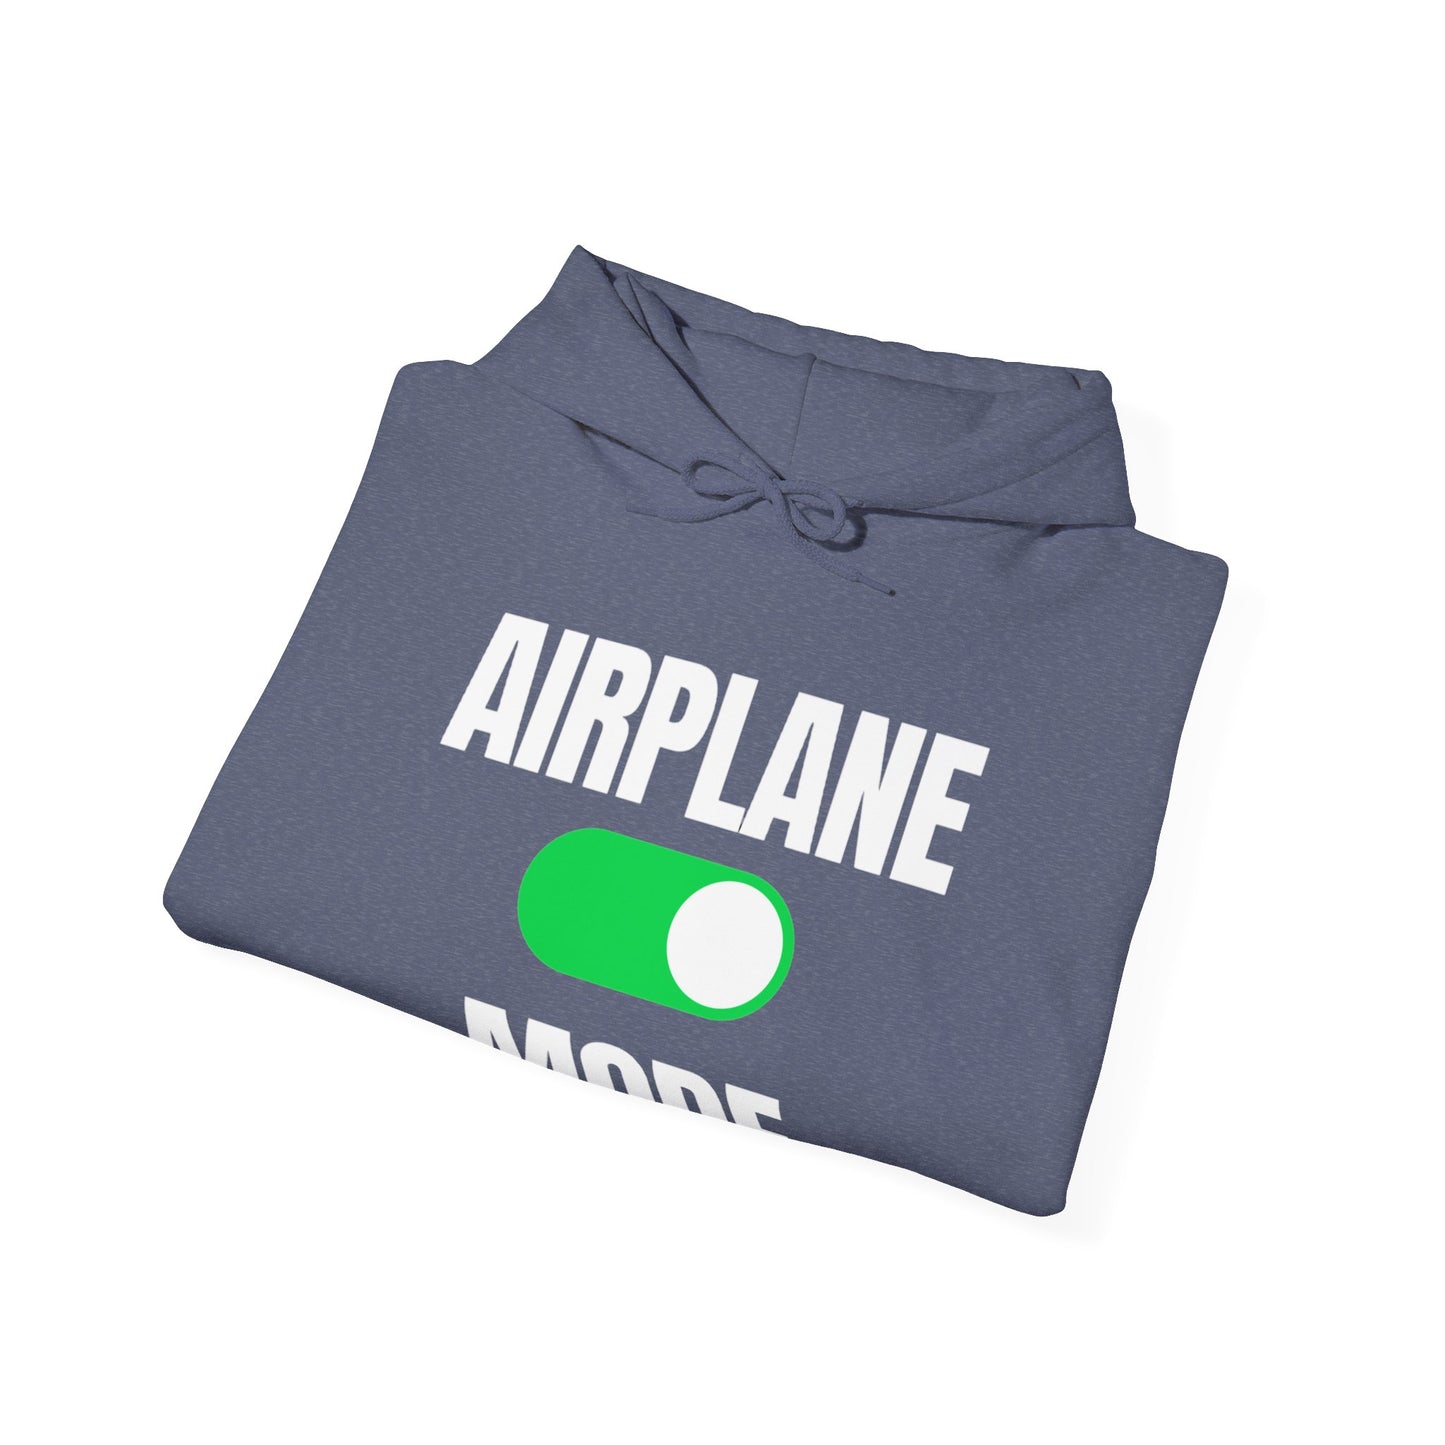 Airplane mode hoodie